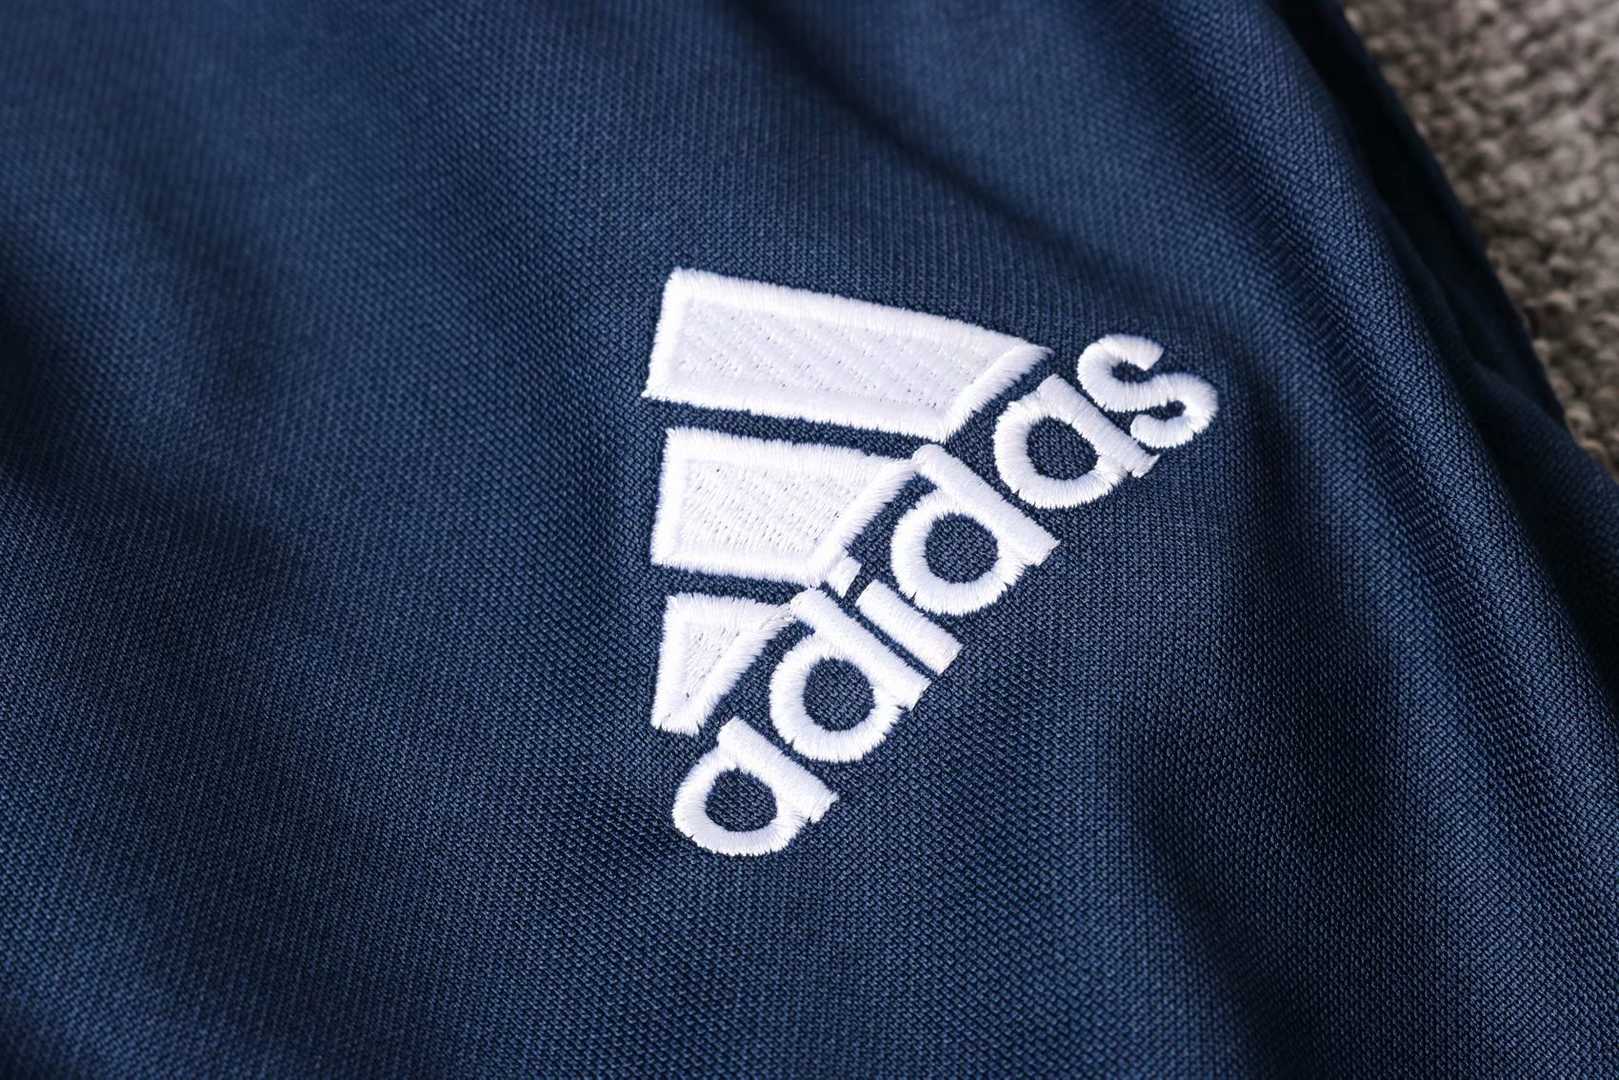 2020/21 Cruzeiro Navy Mens Soccer Training Suit(Jacket + Pants)